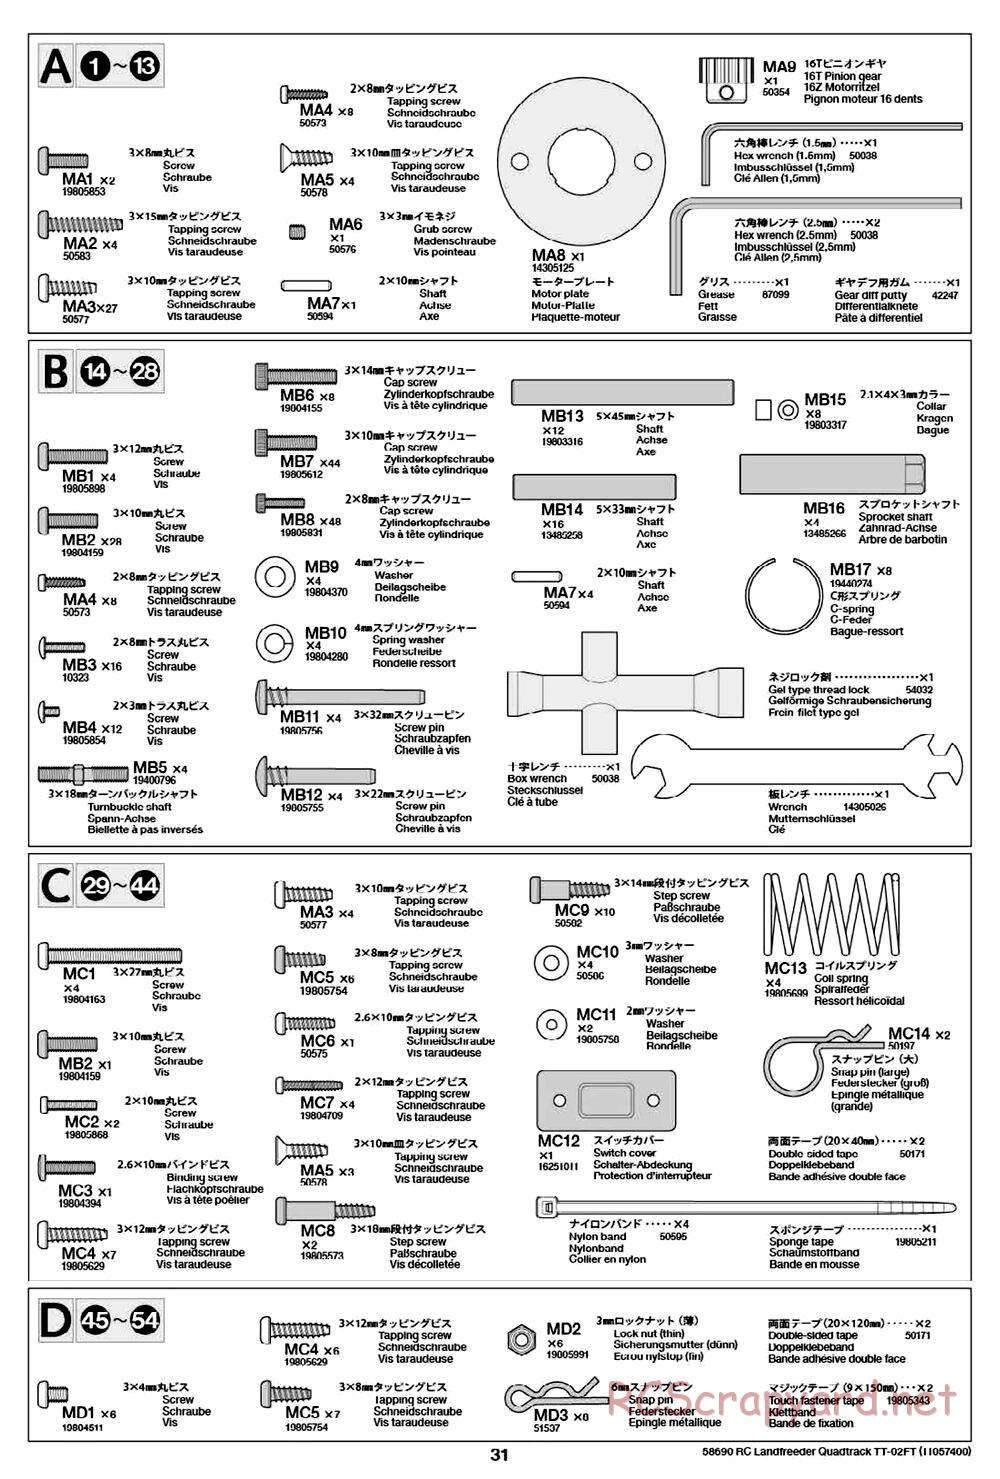 Tamiya - Landfreeder Quadtrack - TT-02FT Chassis - Manual - Page 31